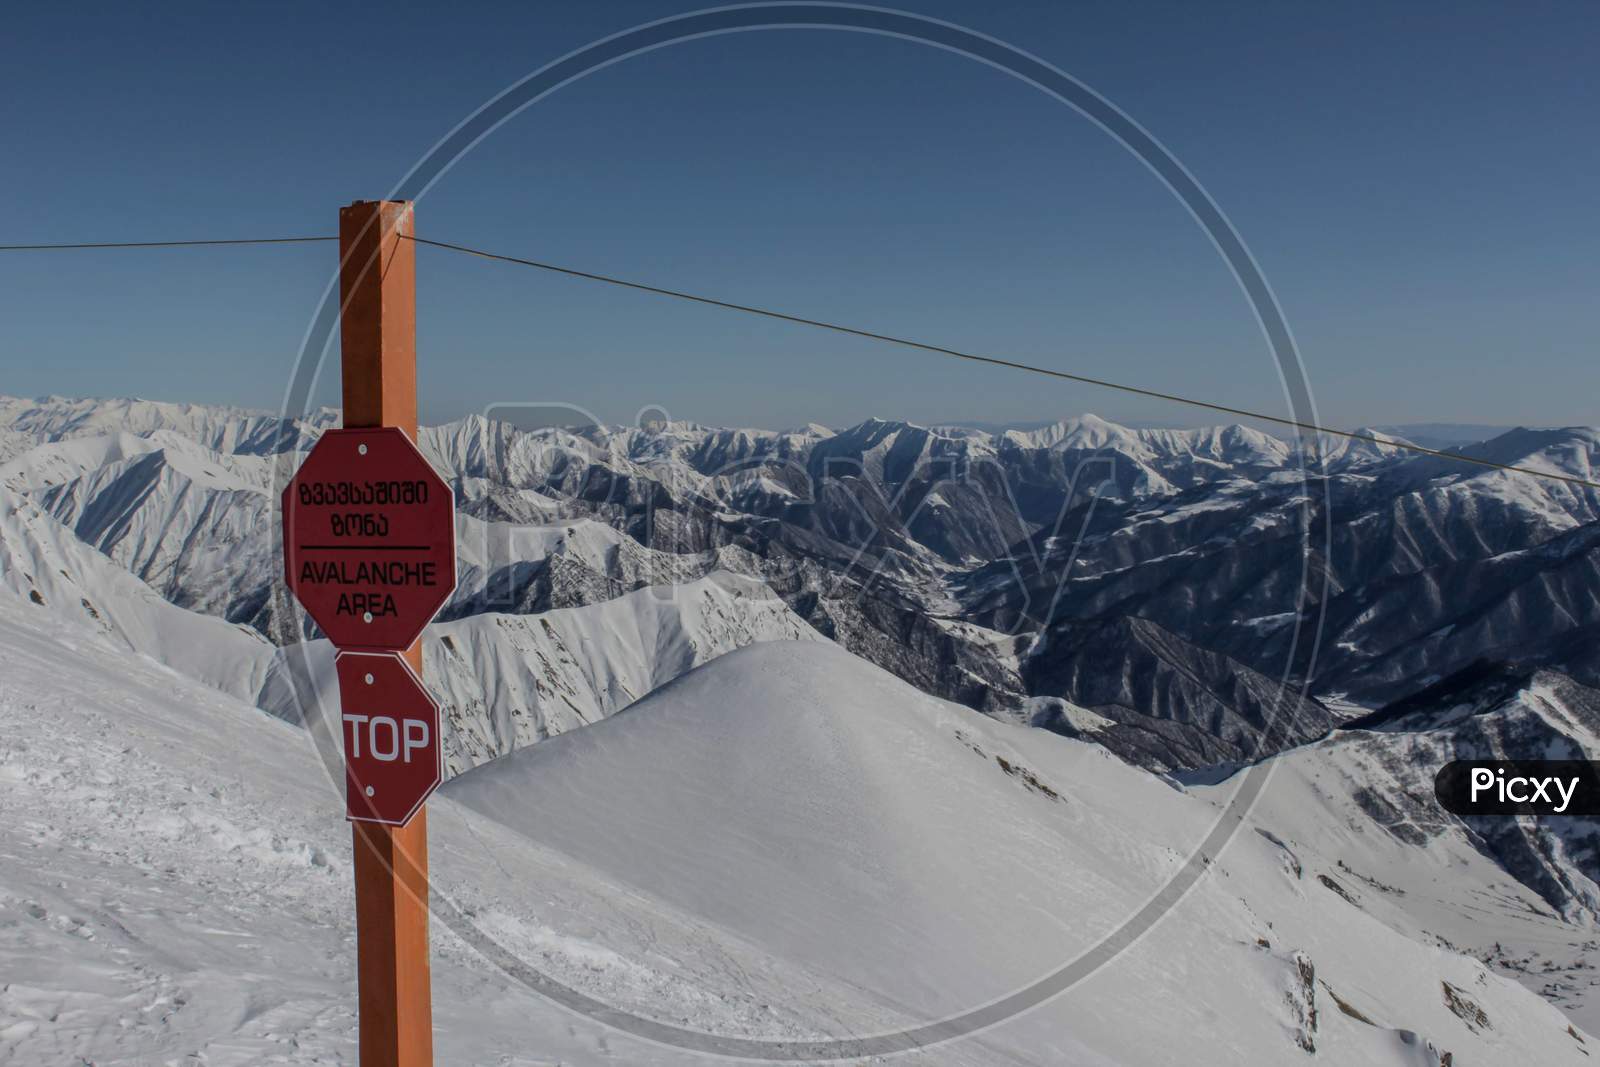 Ski Resort Attention Signs